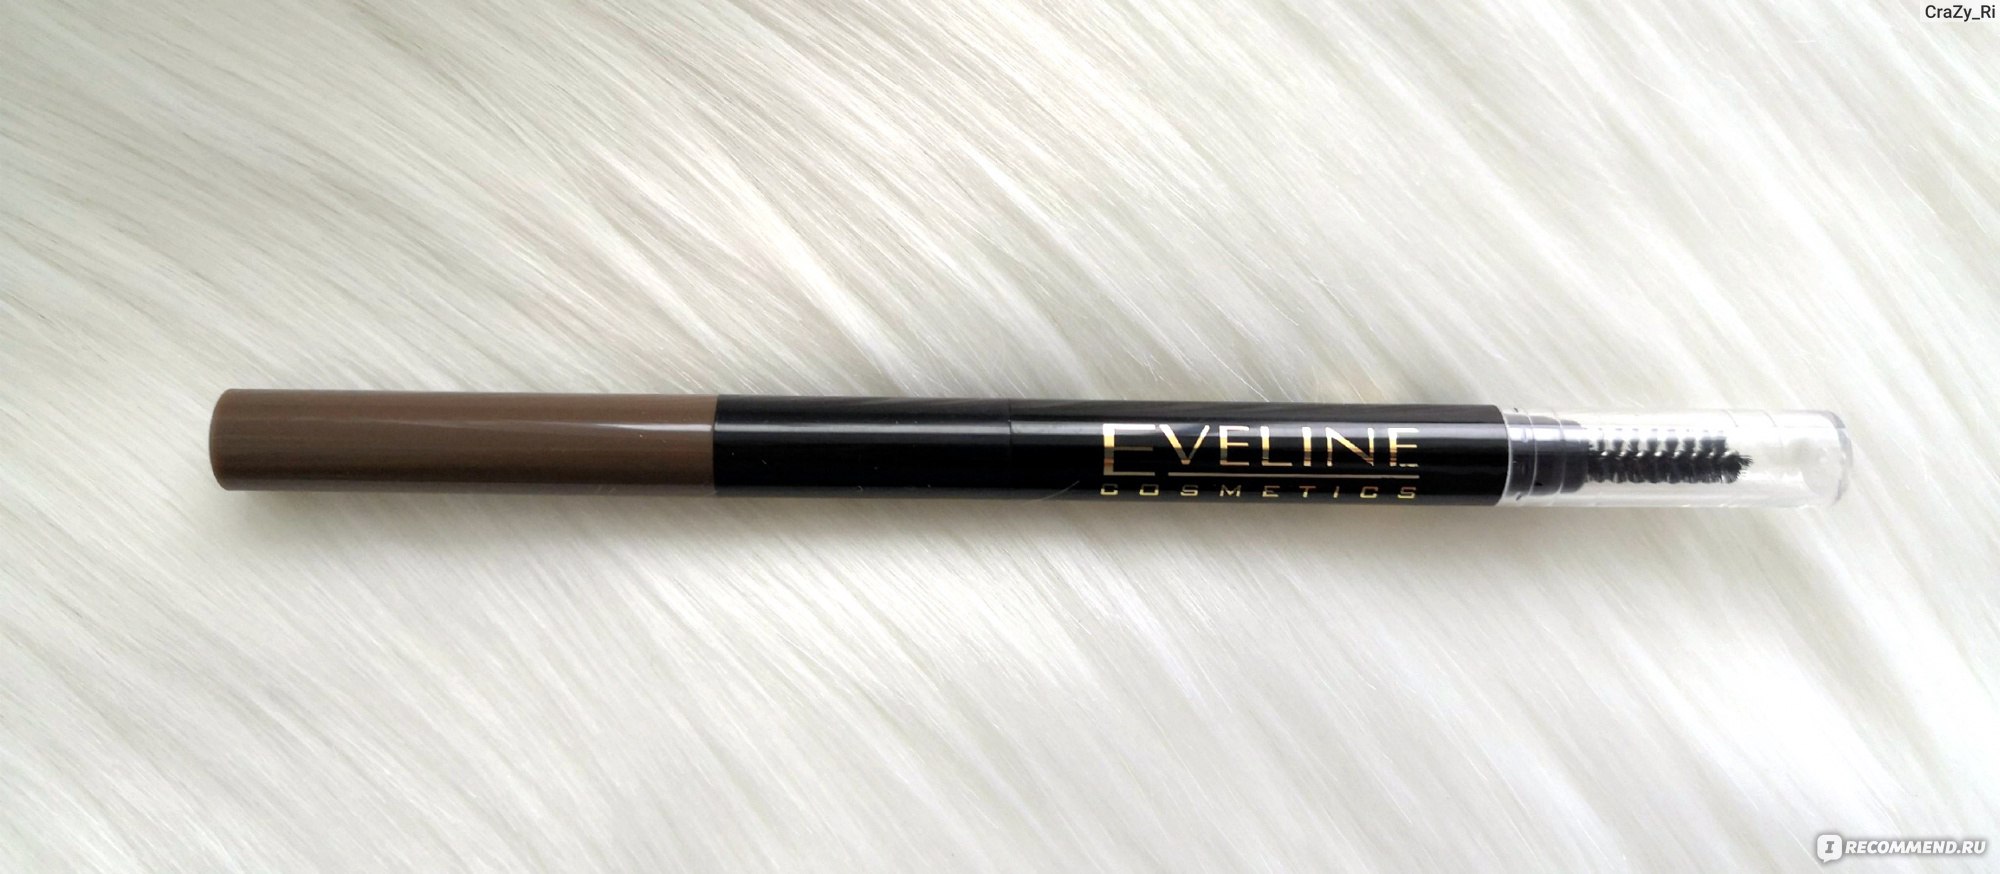 Eveline brow. Eveline карандаш для бровей Brow Multifunction Styler 3 in 1. Стайлер для бровей Eveline 3 в 1. Eveline 3in11 карандаш. Eveline Cosmetics Brow Styler 3in1 Multifunction.